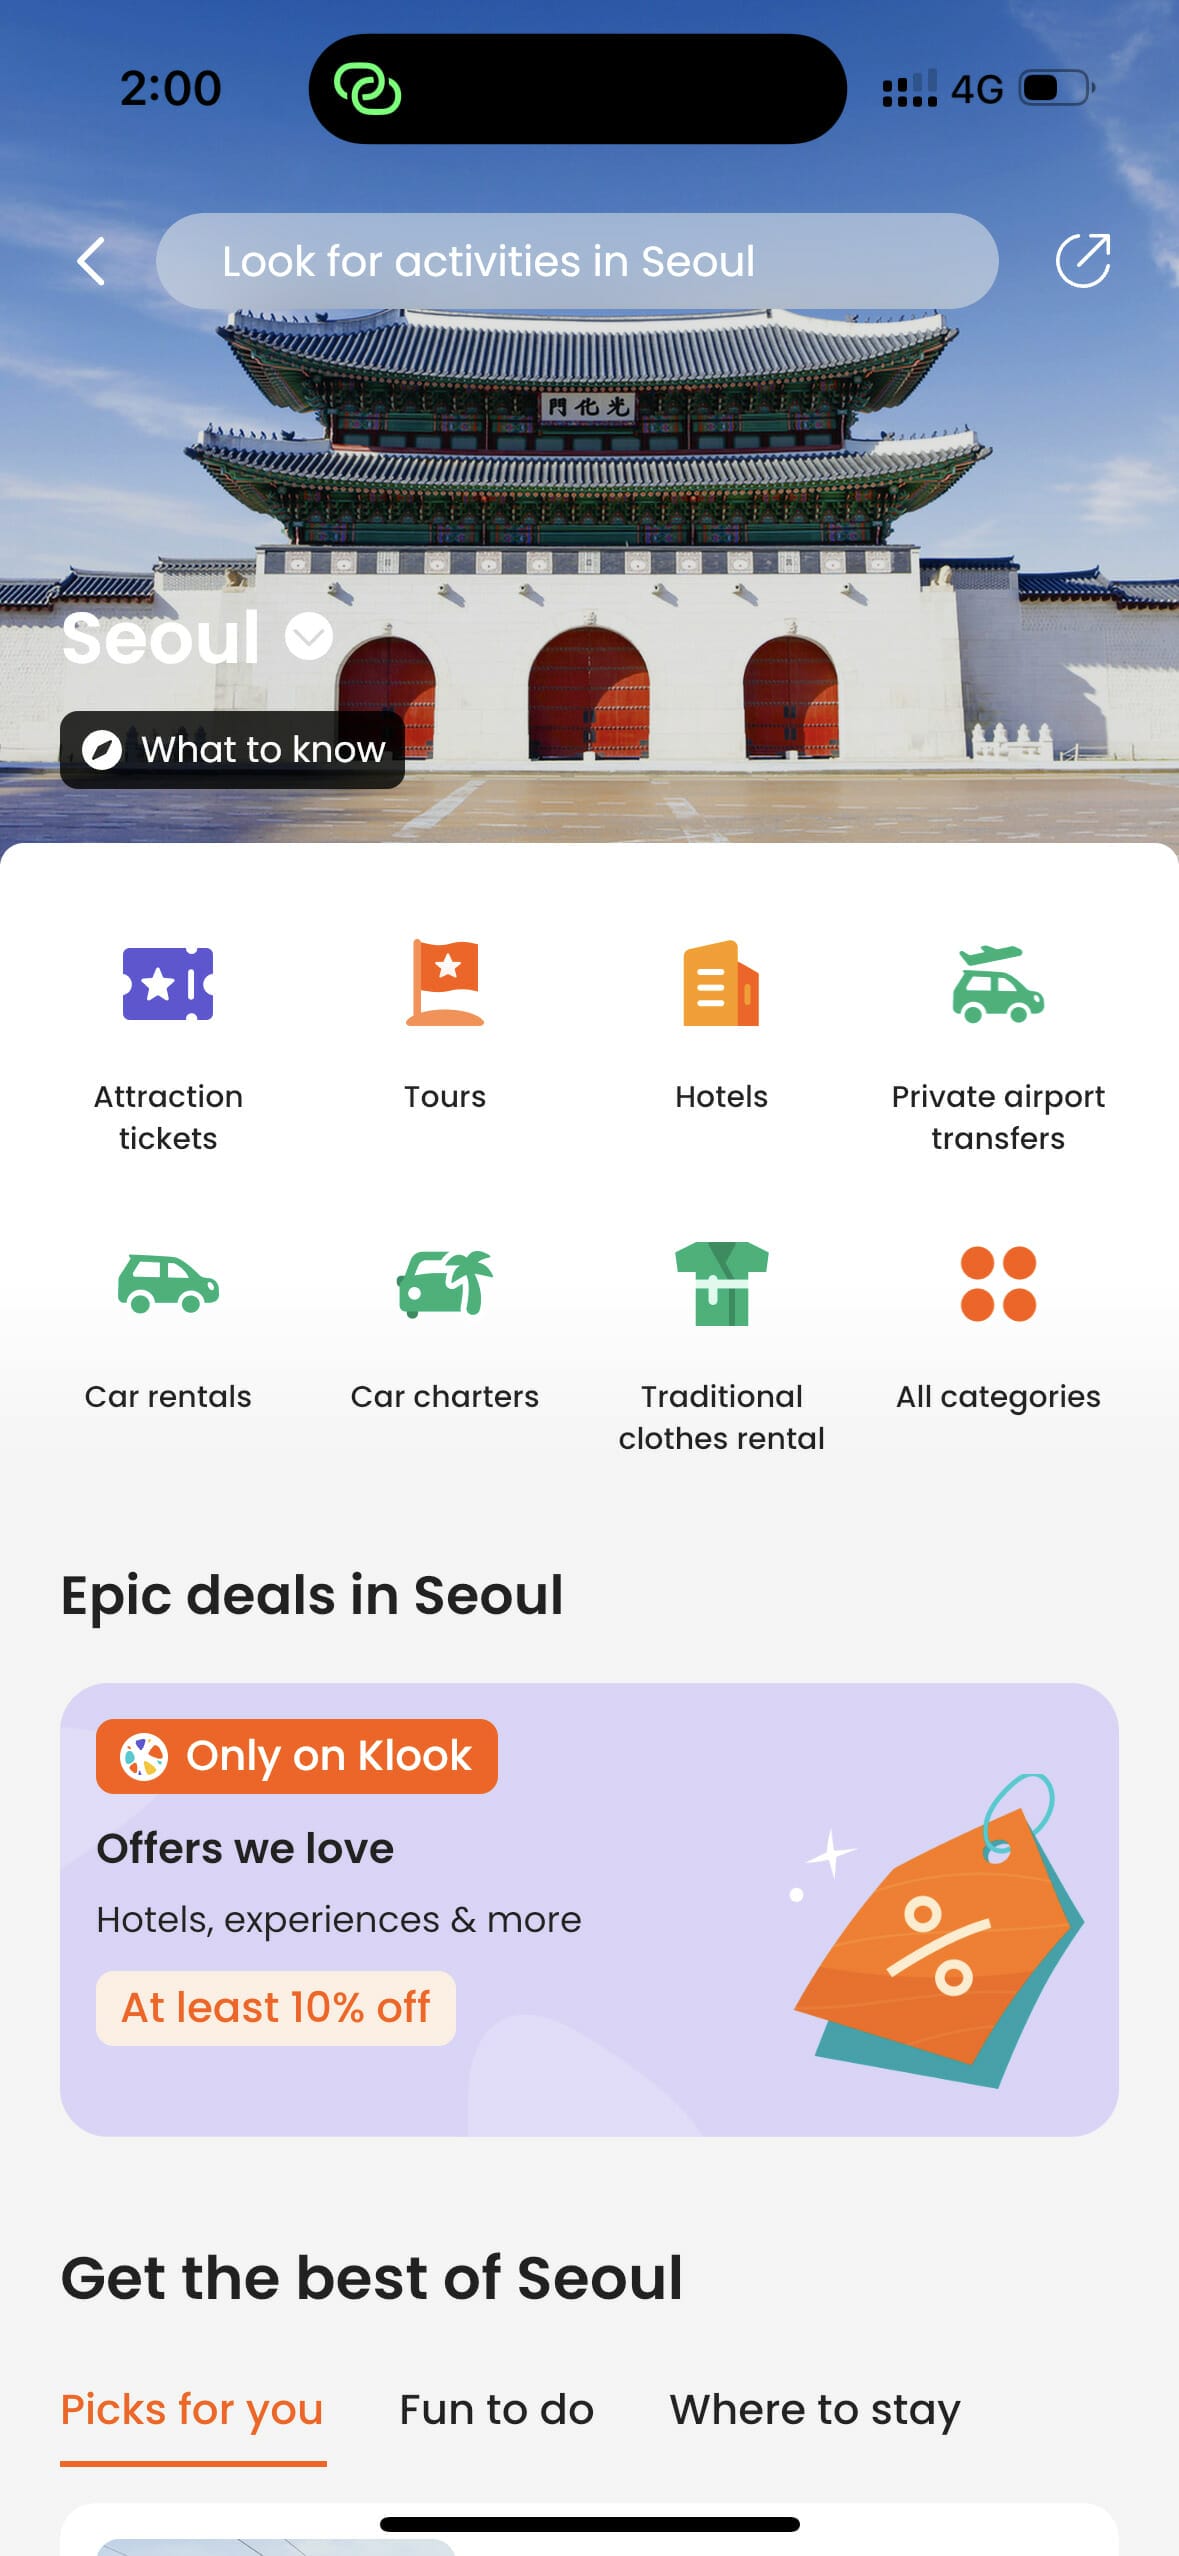 13 Best Korean Travel Apps - Prepare for Your Korea Trip 22